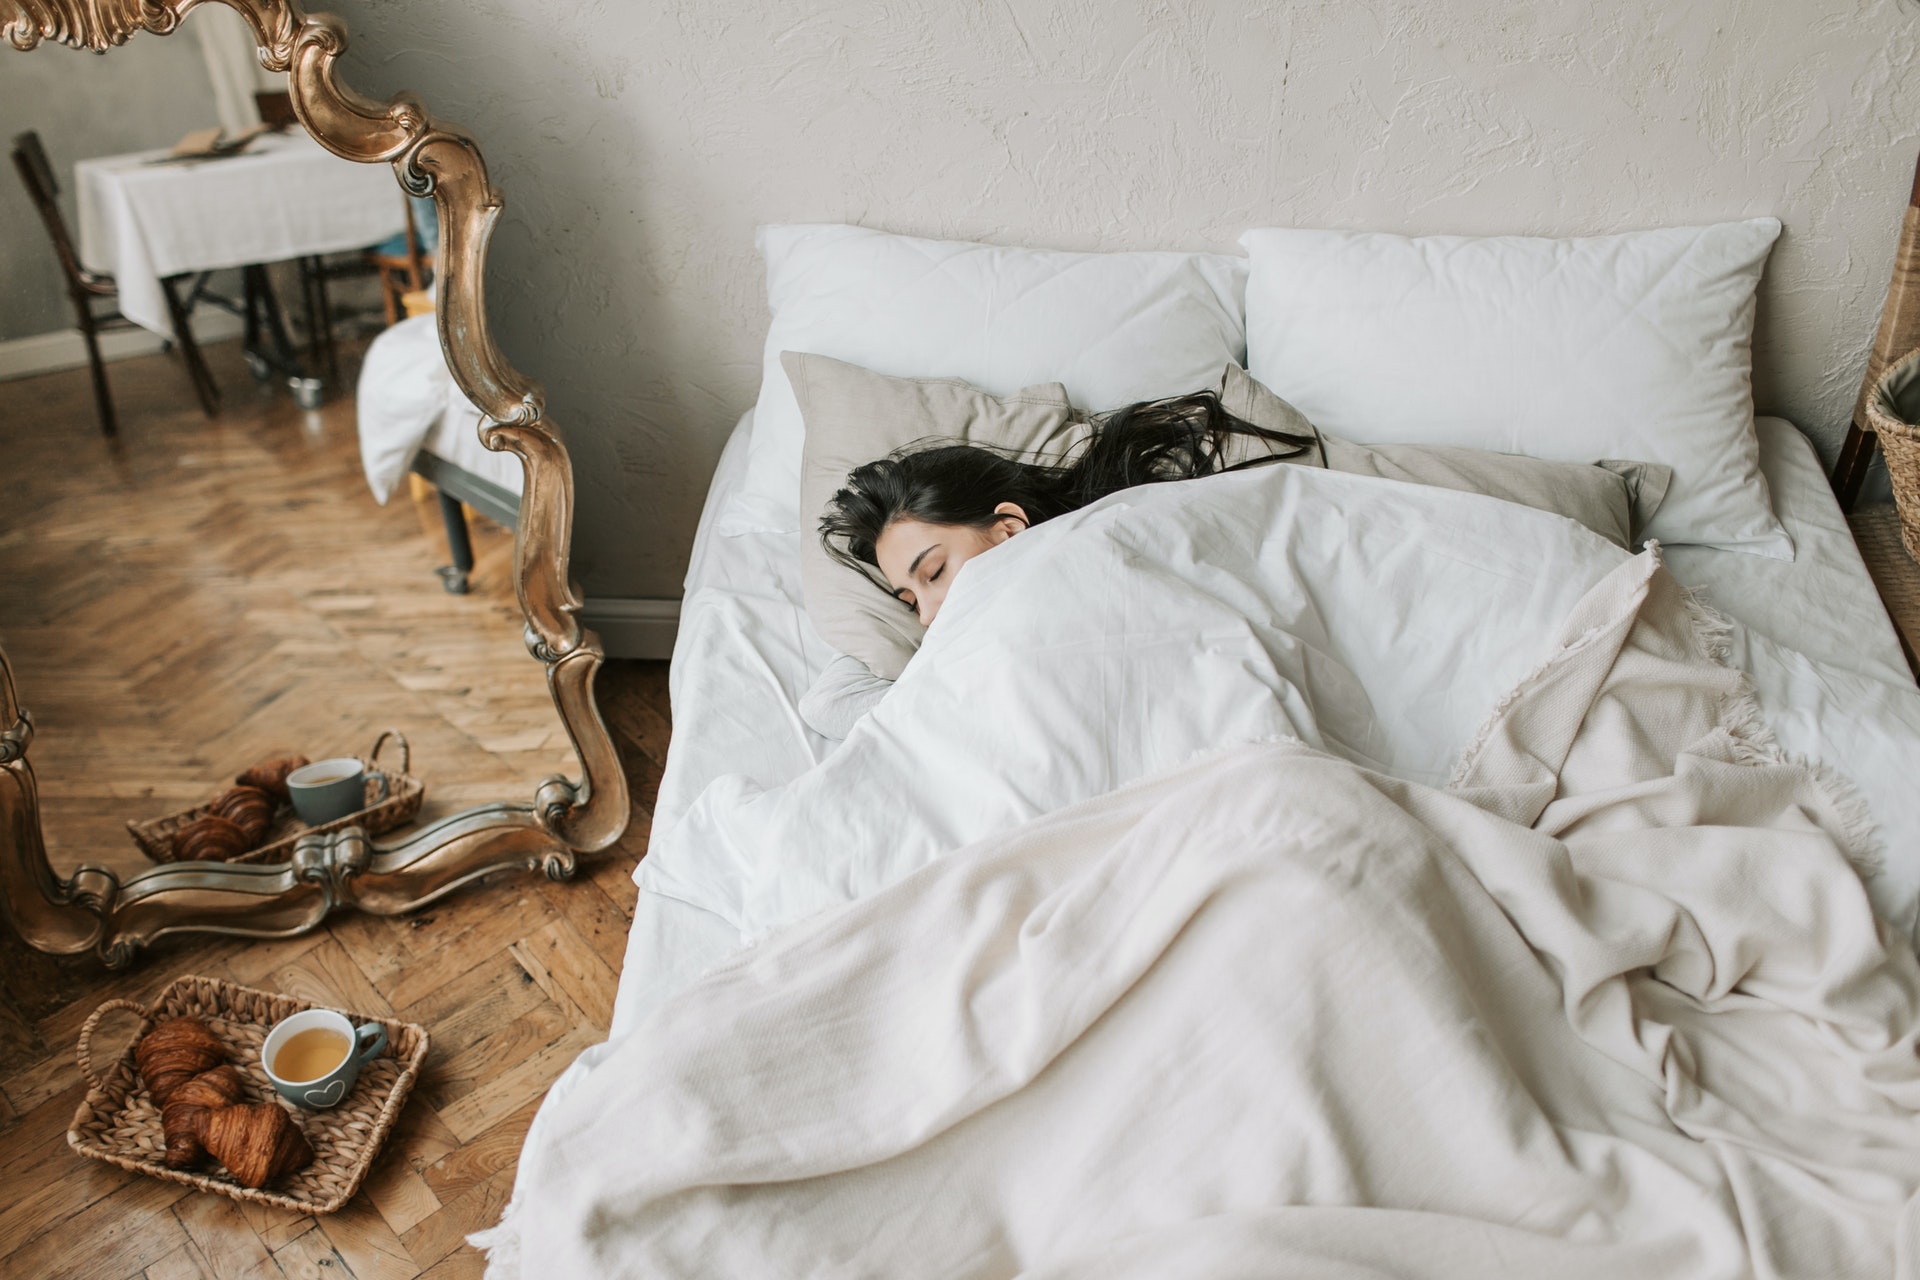 Signs You Could Be Having Sleep Apnea